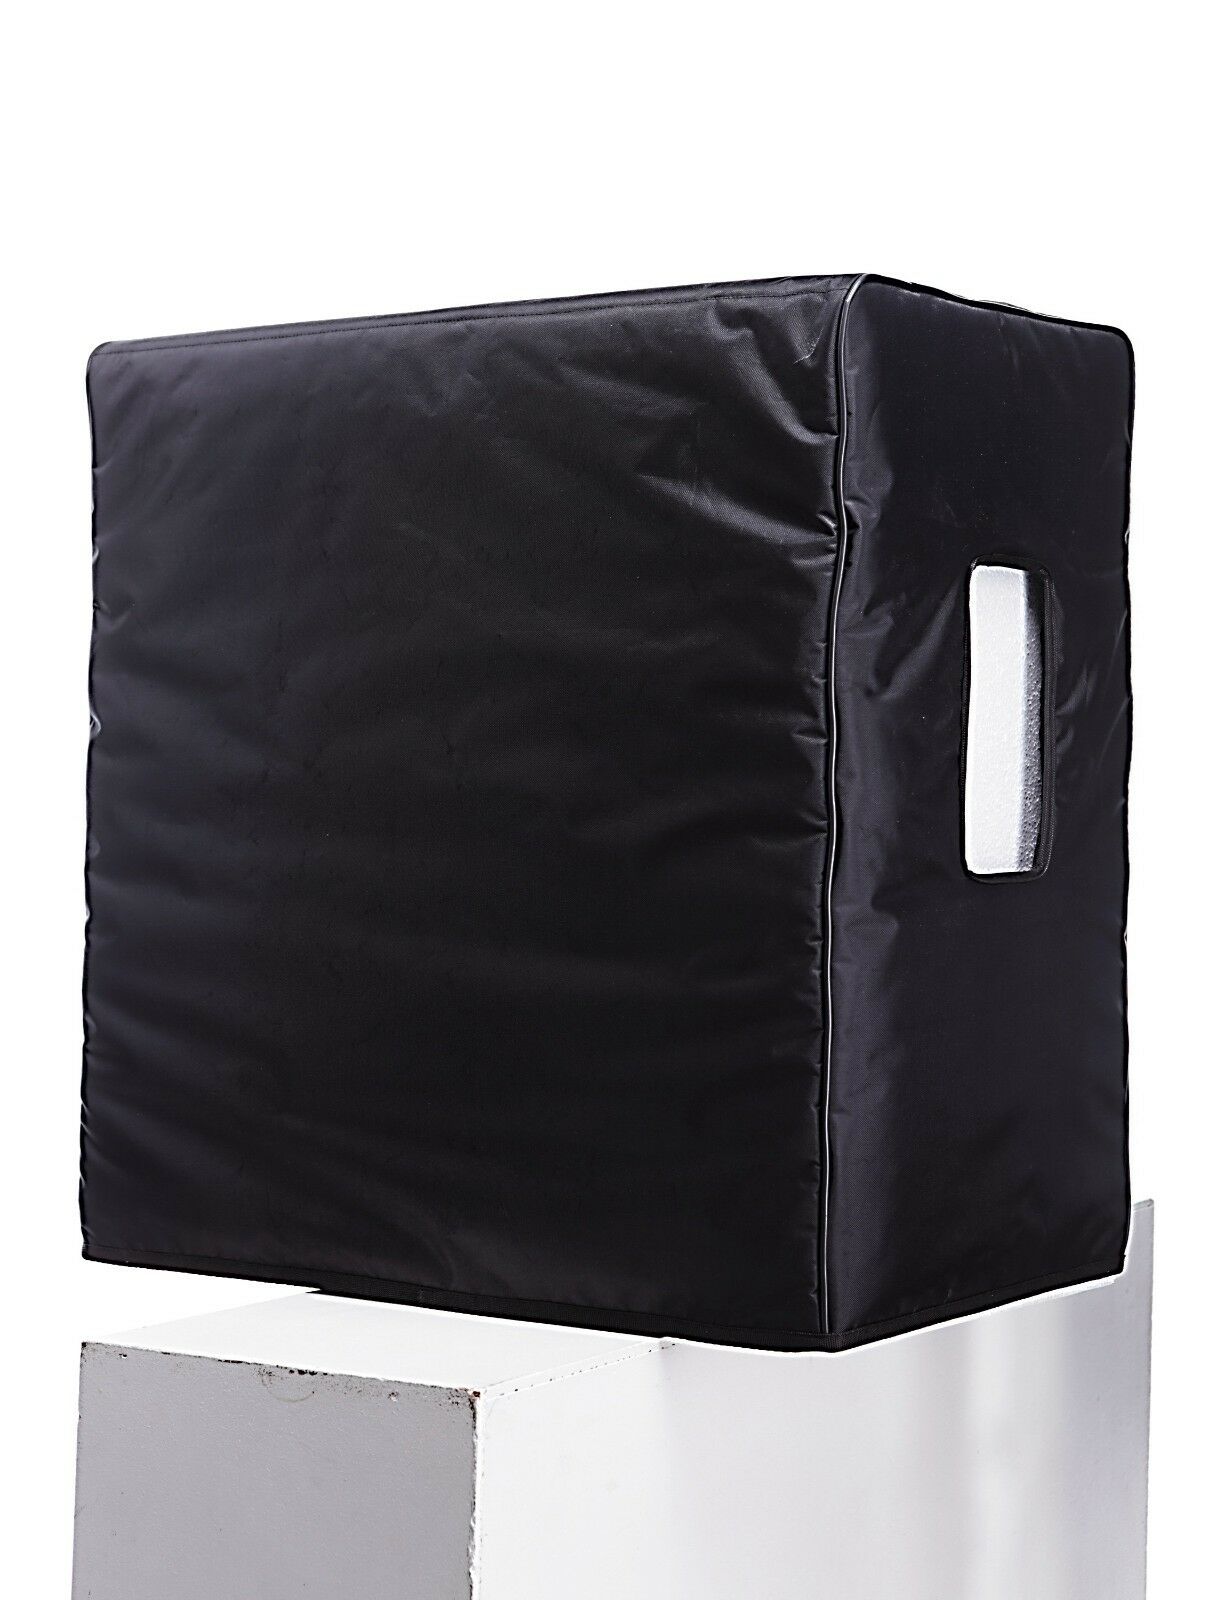 Custom padded cover for FRAMUS Dragon 4x12 Straight cabinet 4x12"